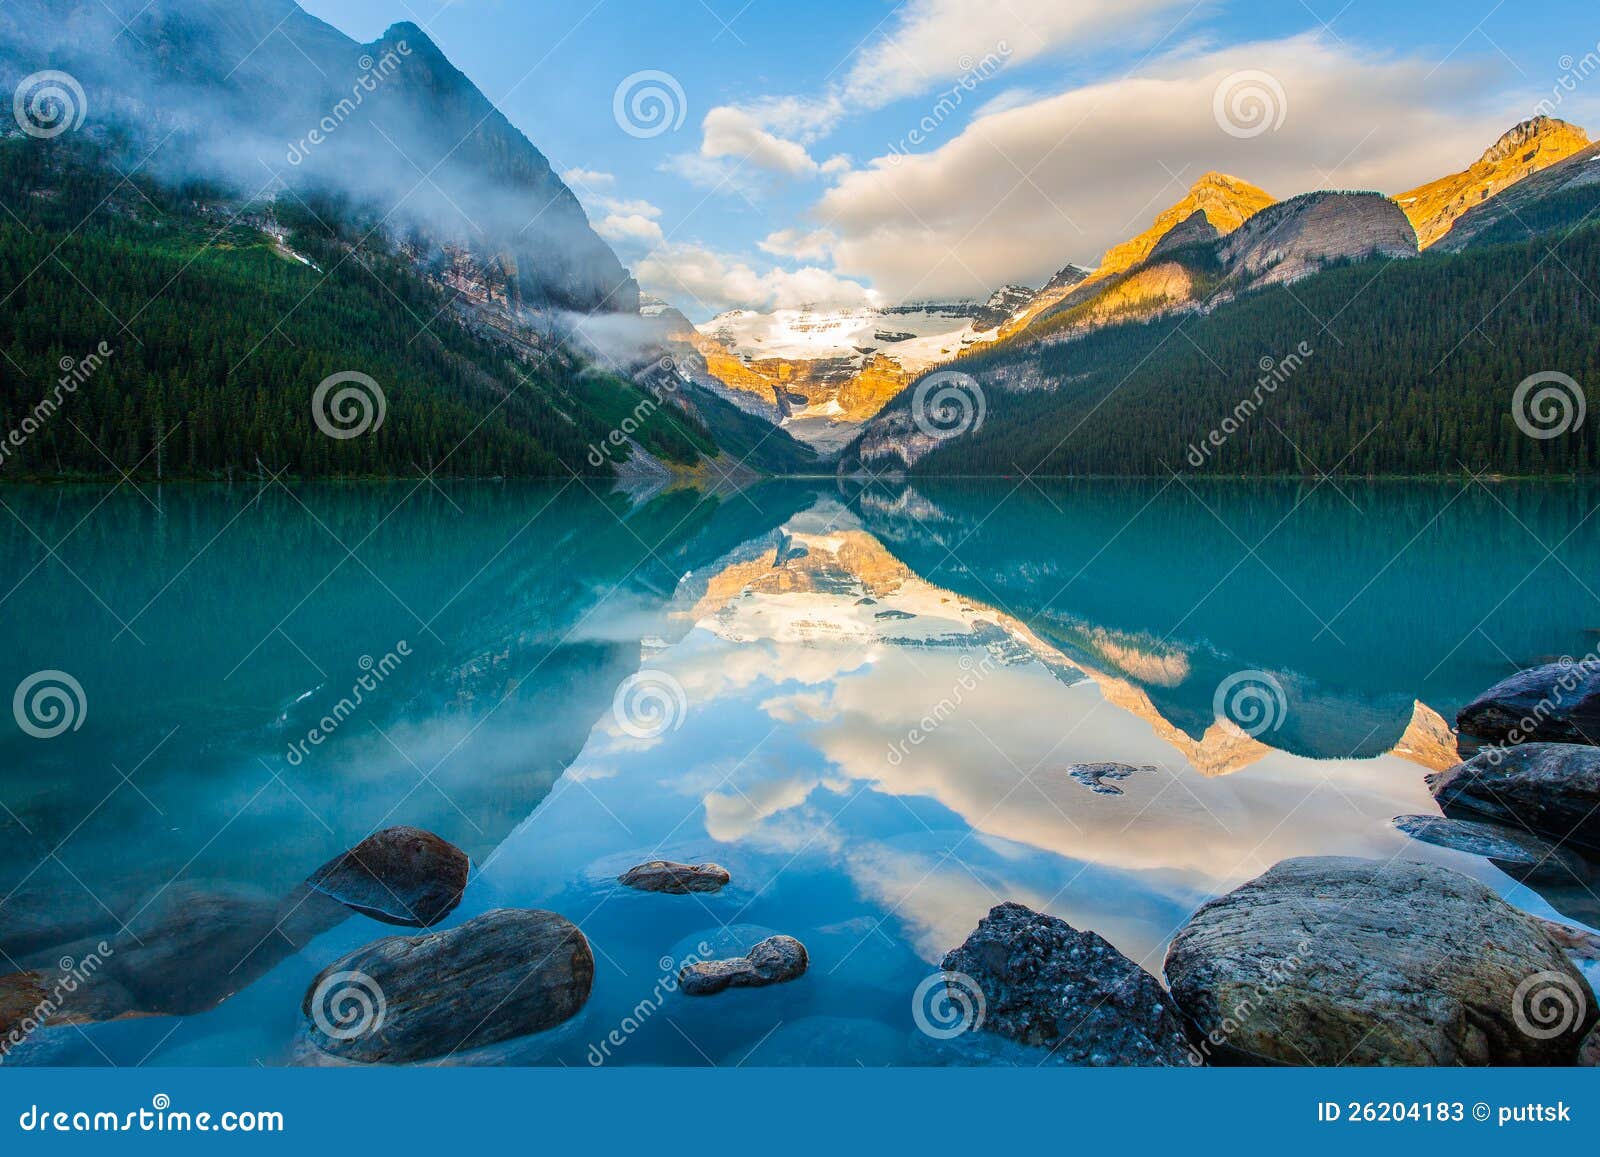 mountain reflection on the lake